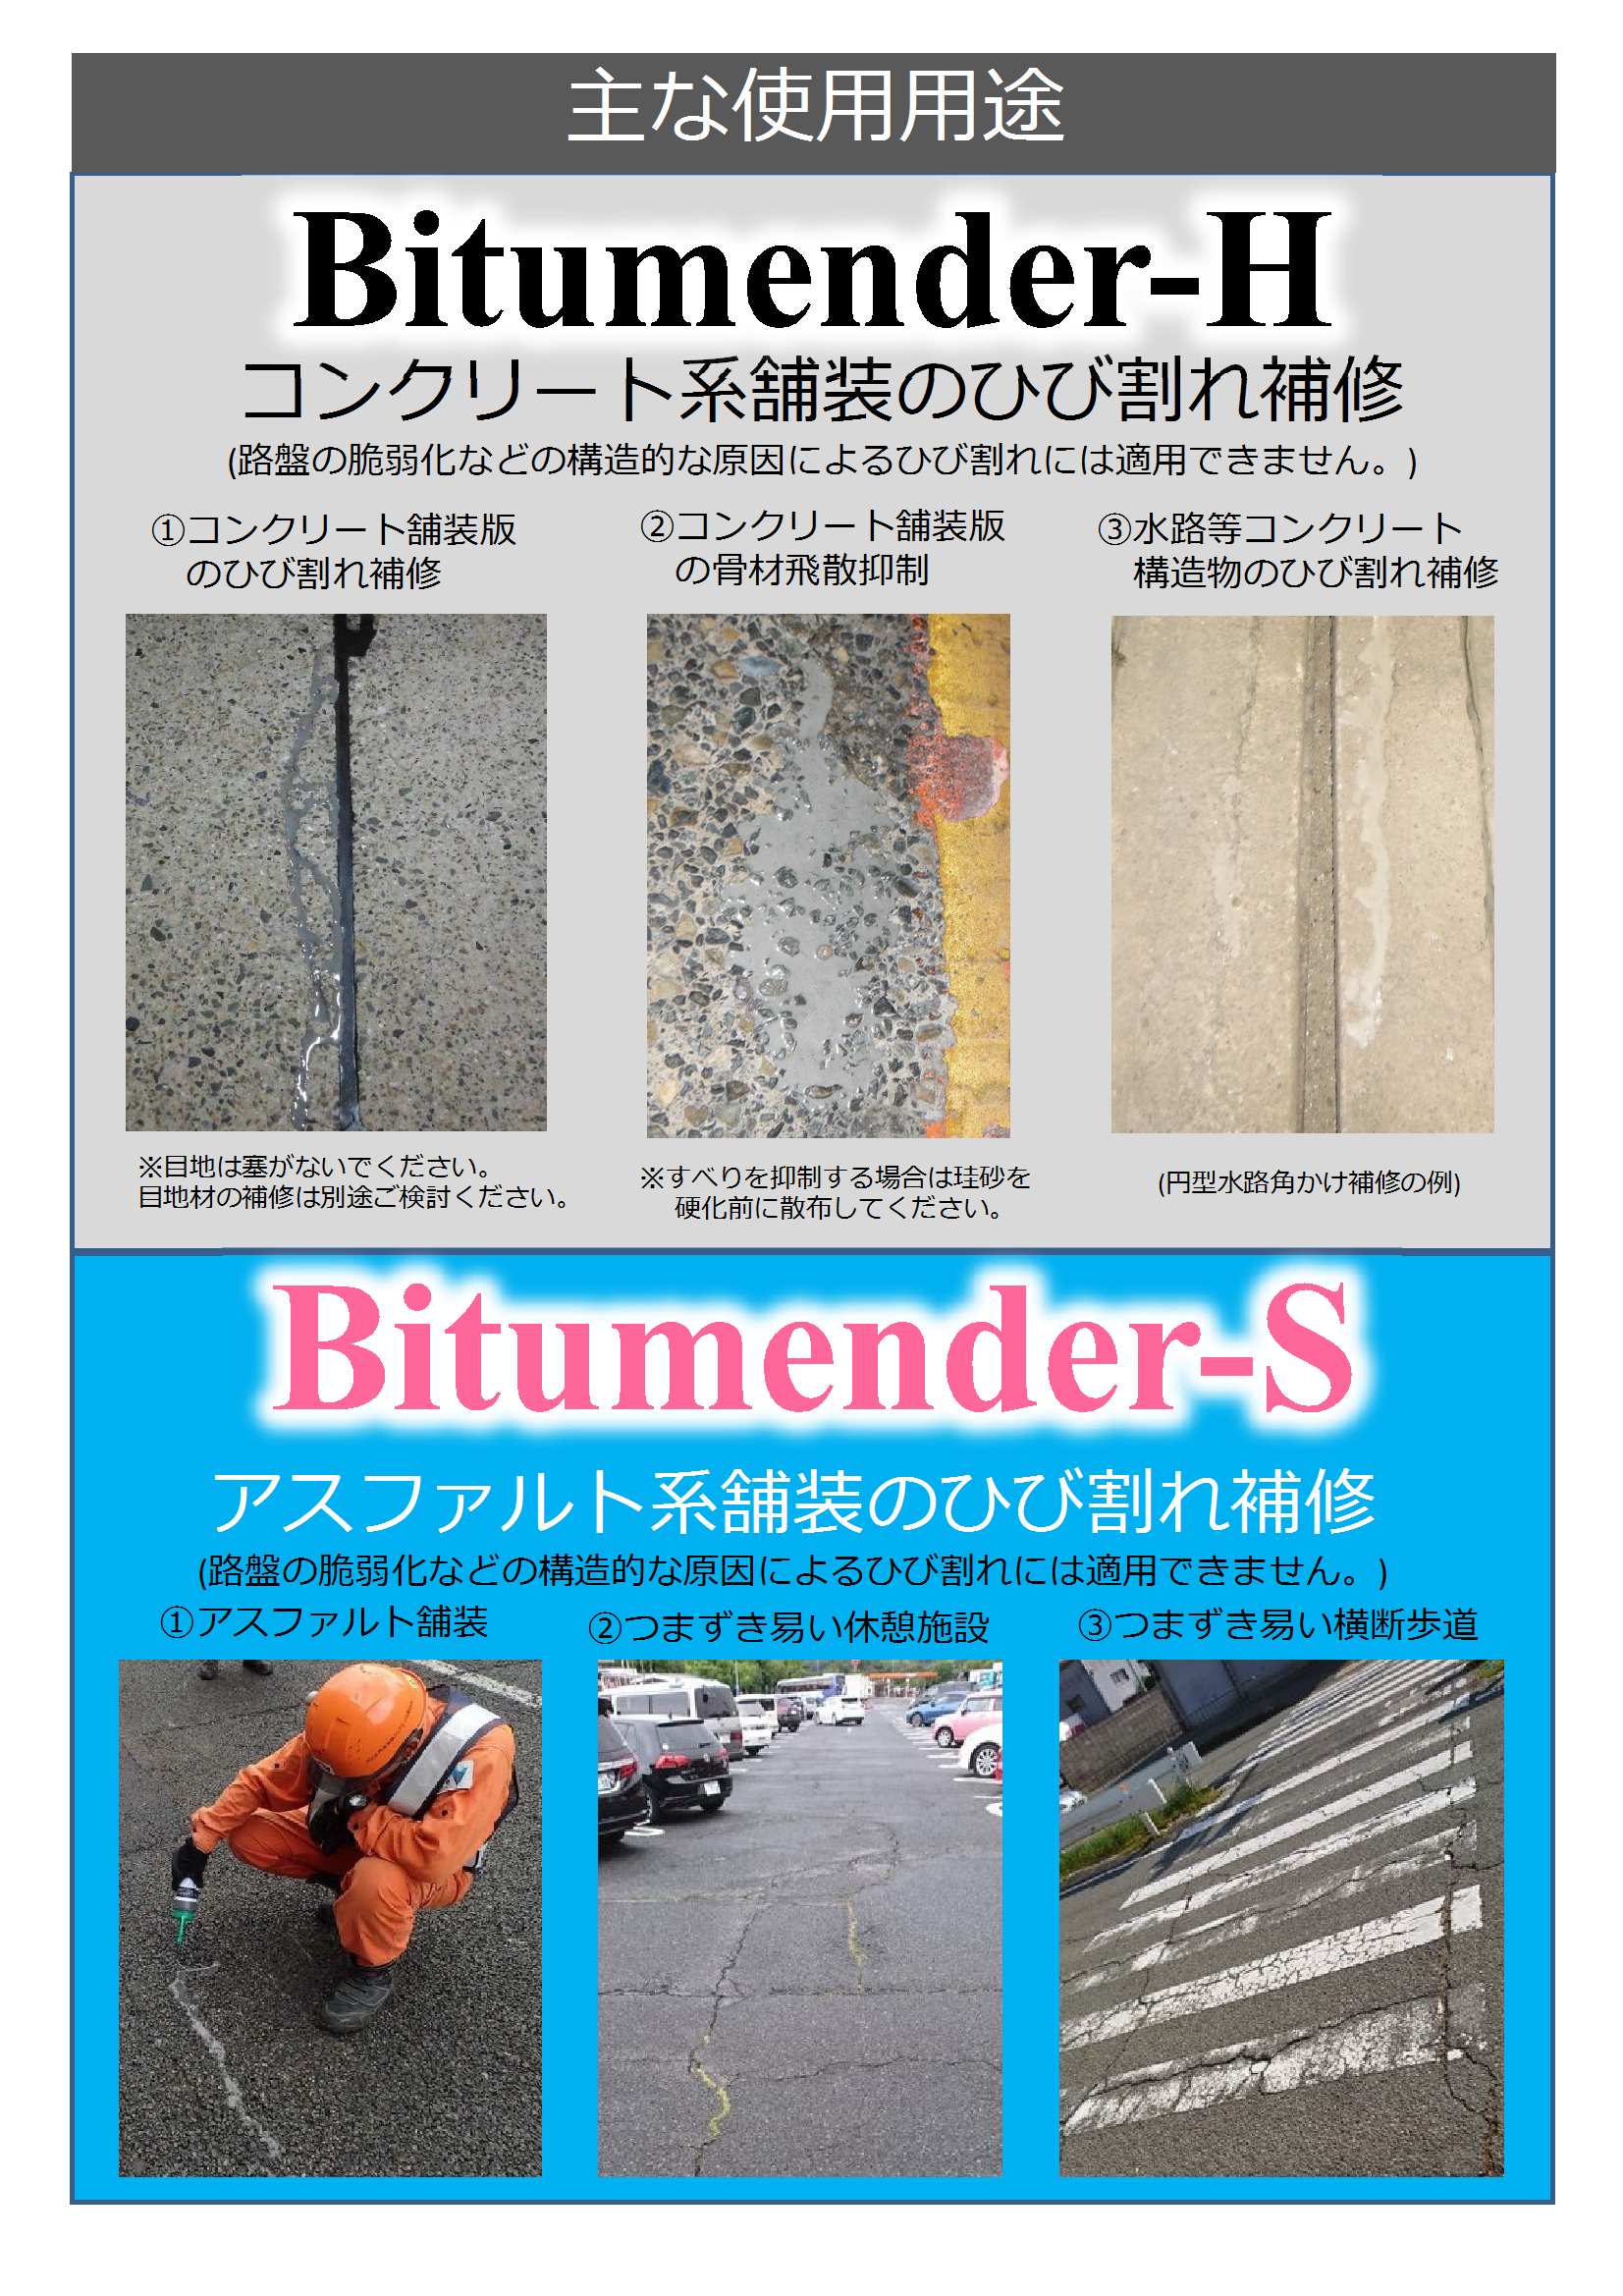 Bitumender 使用用途